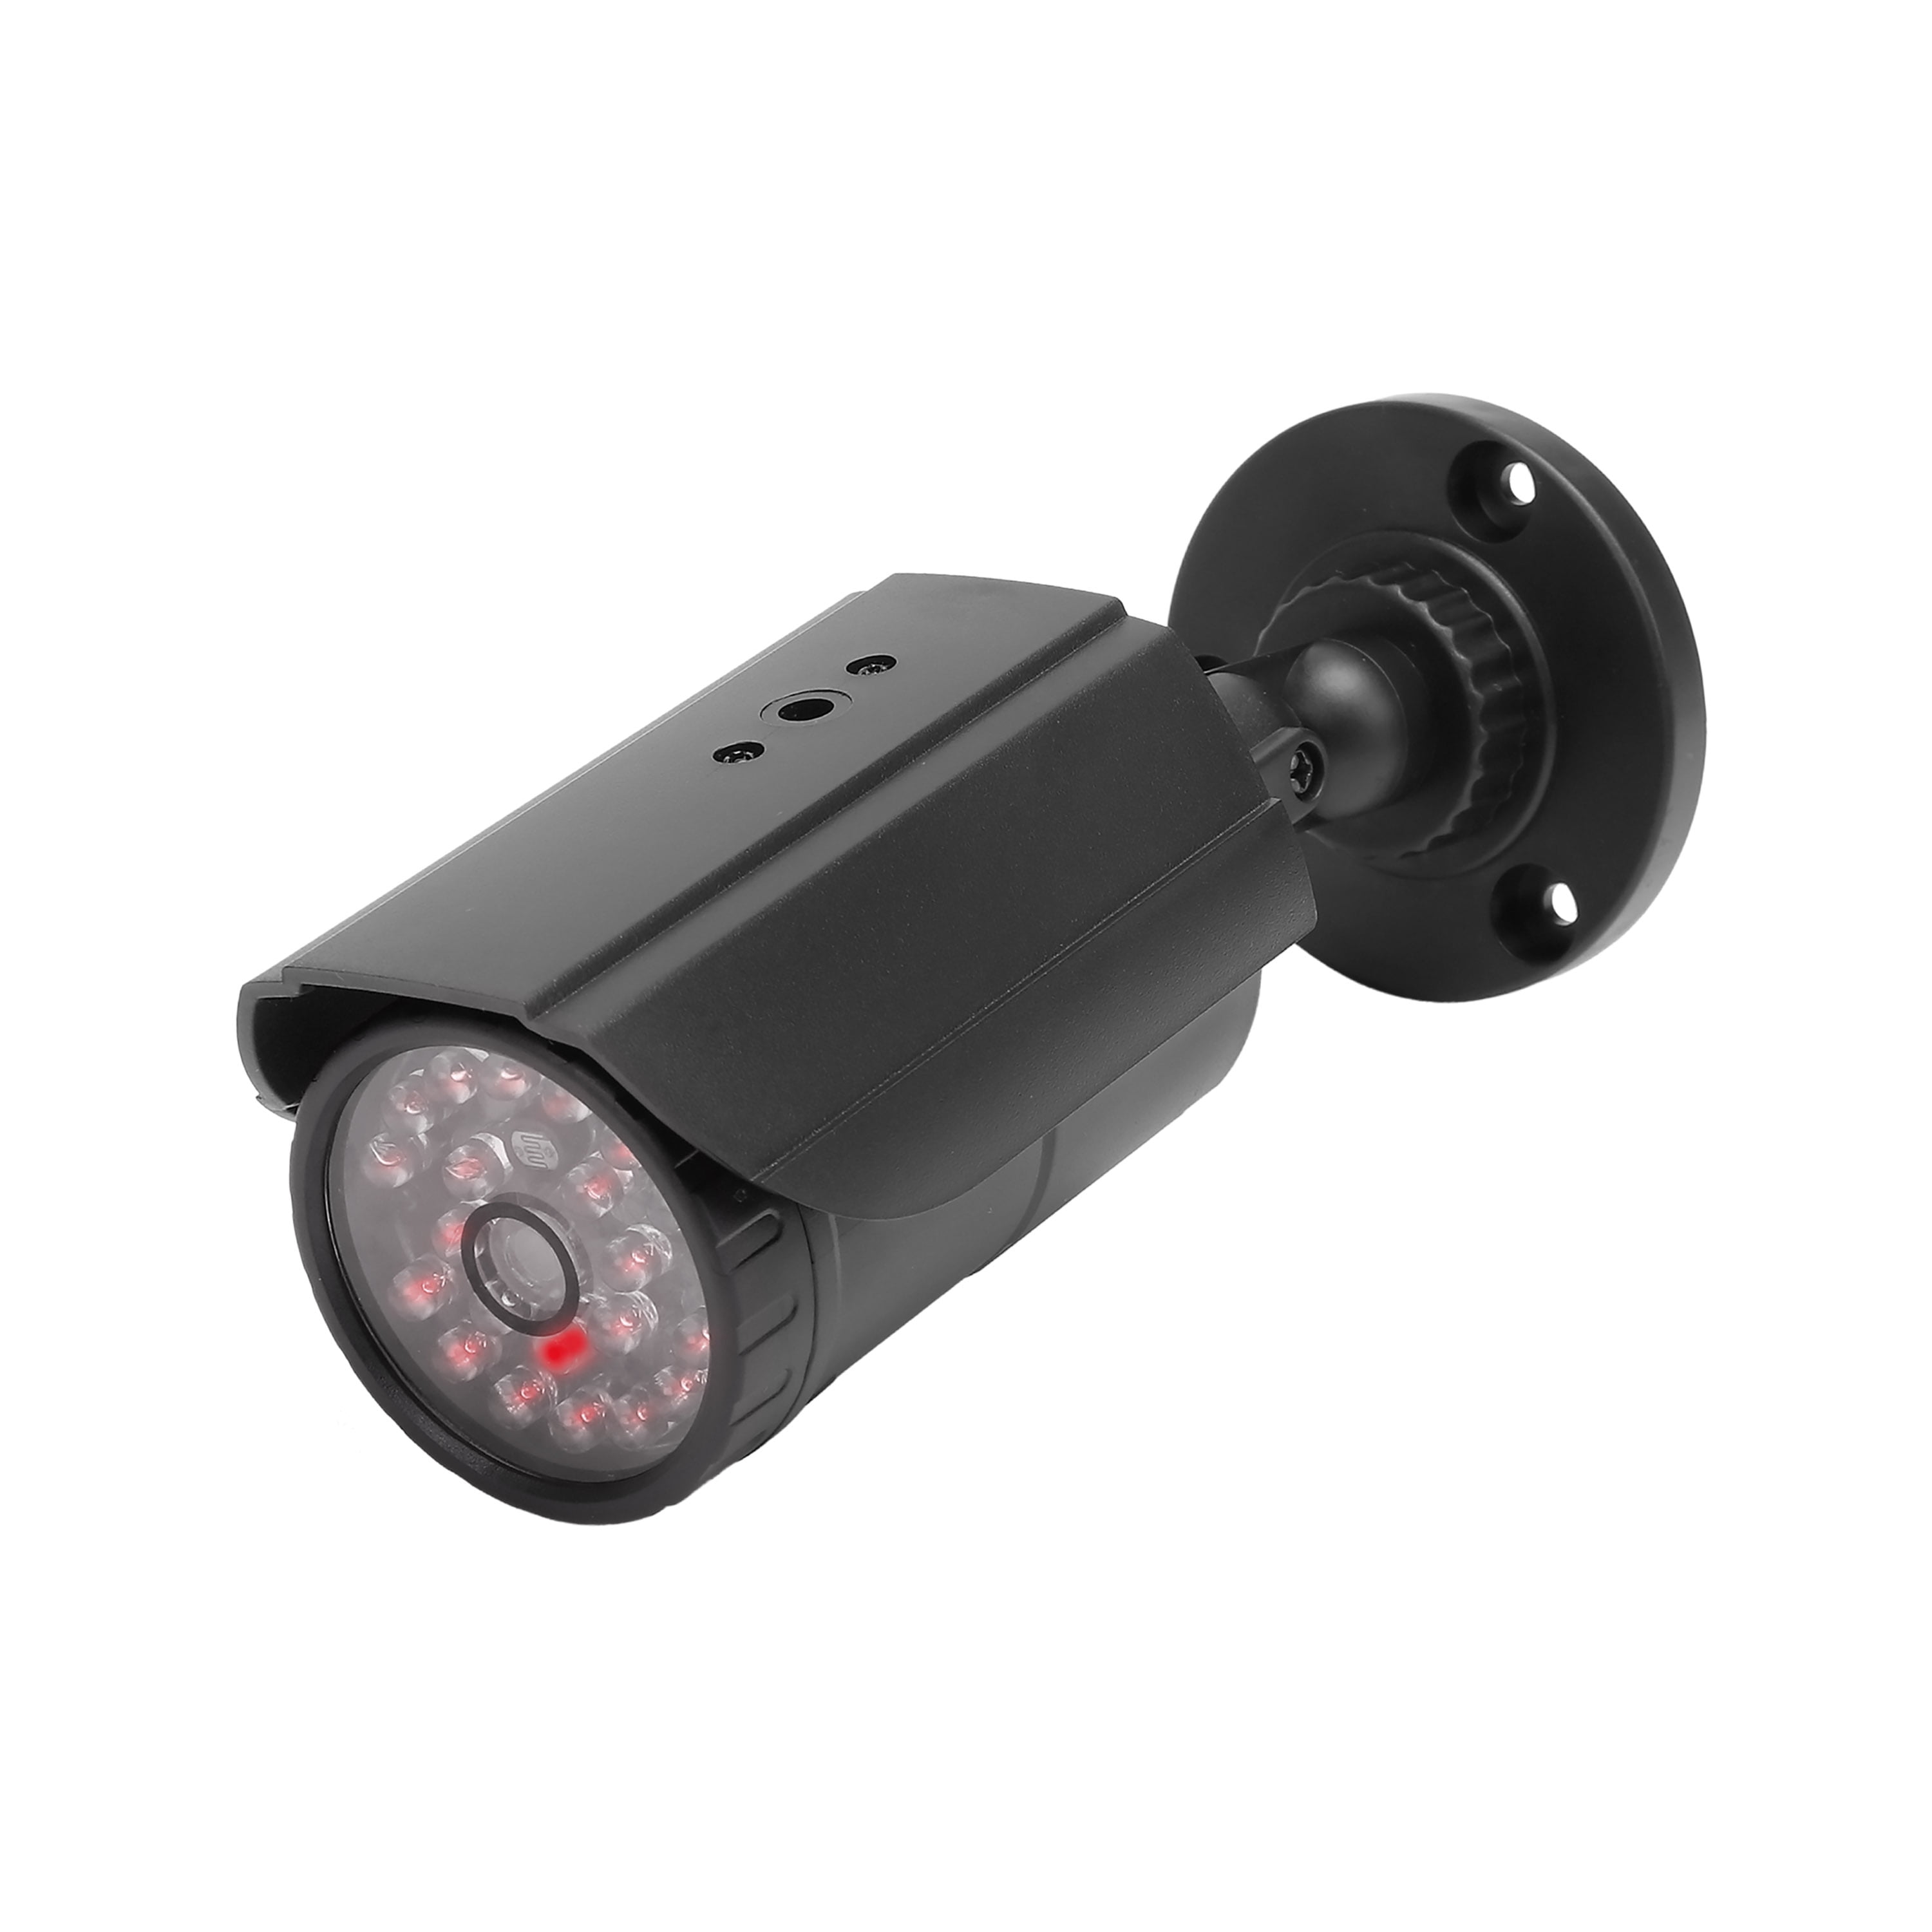 Hyper Tough Decoy Security Camera with 